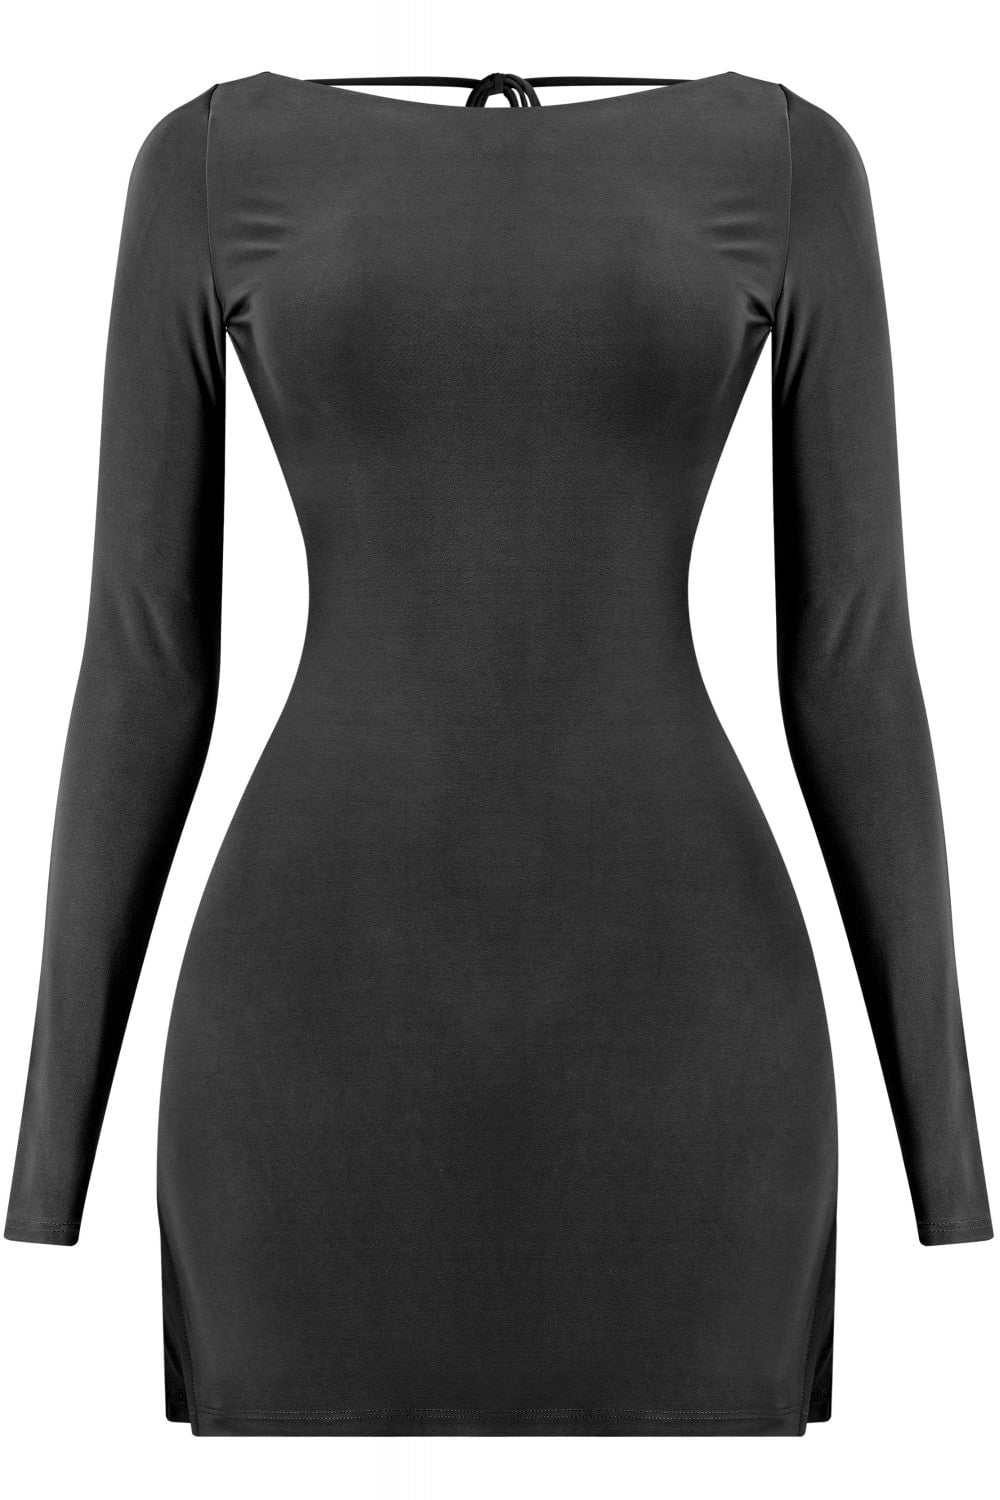 What's It Giving Long Sleeve Open Back Side Slit Mini Dress Black ...